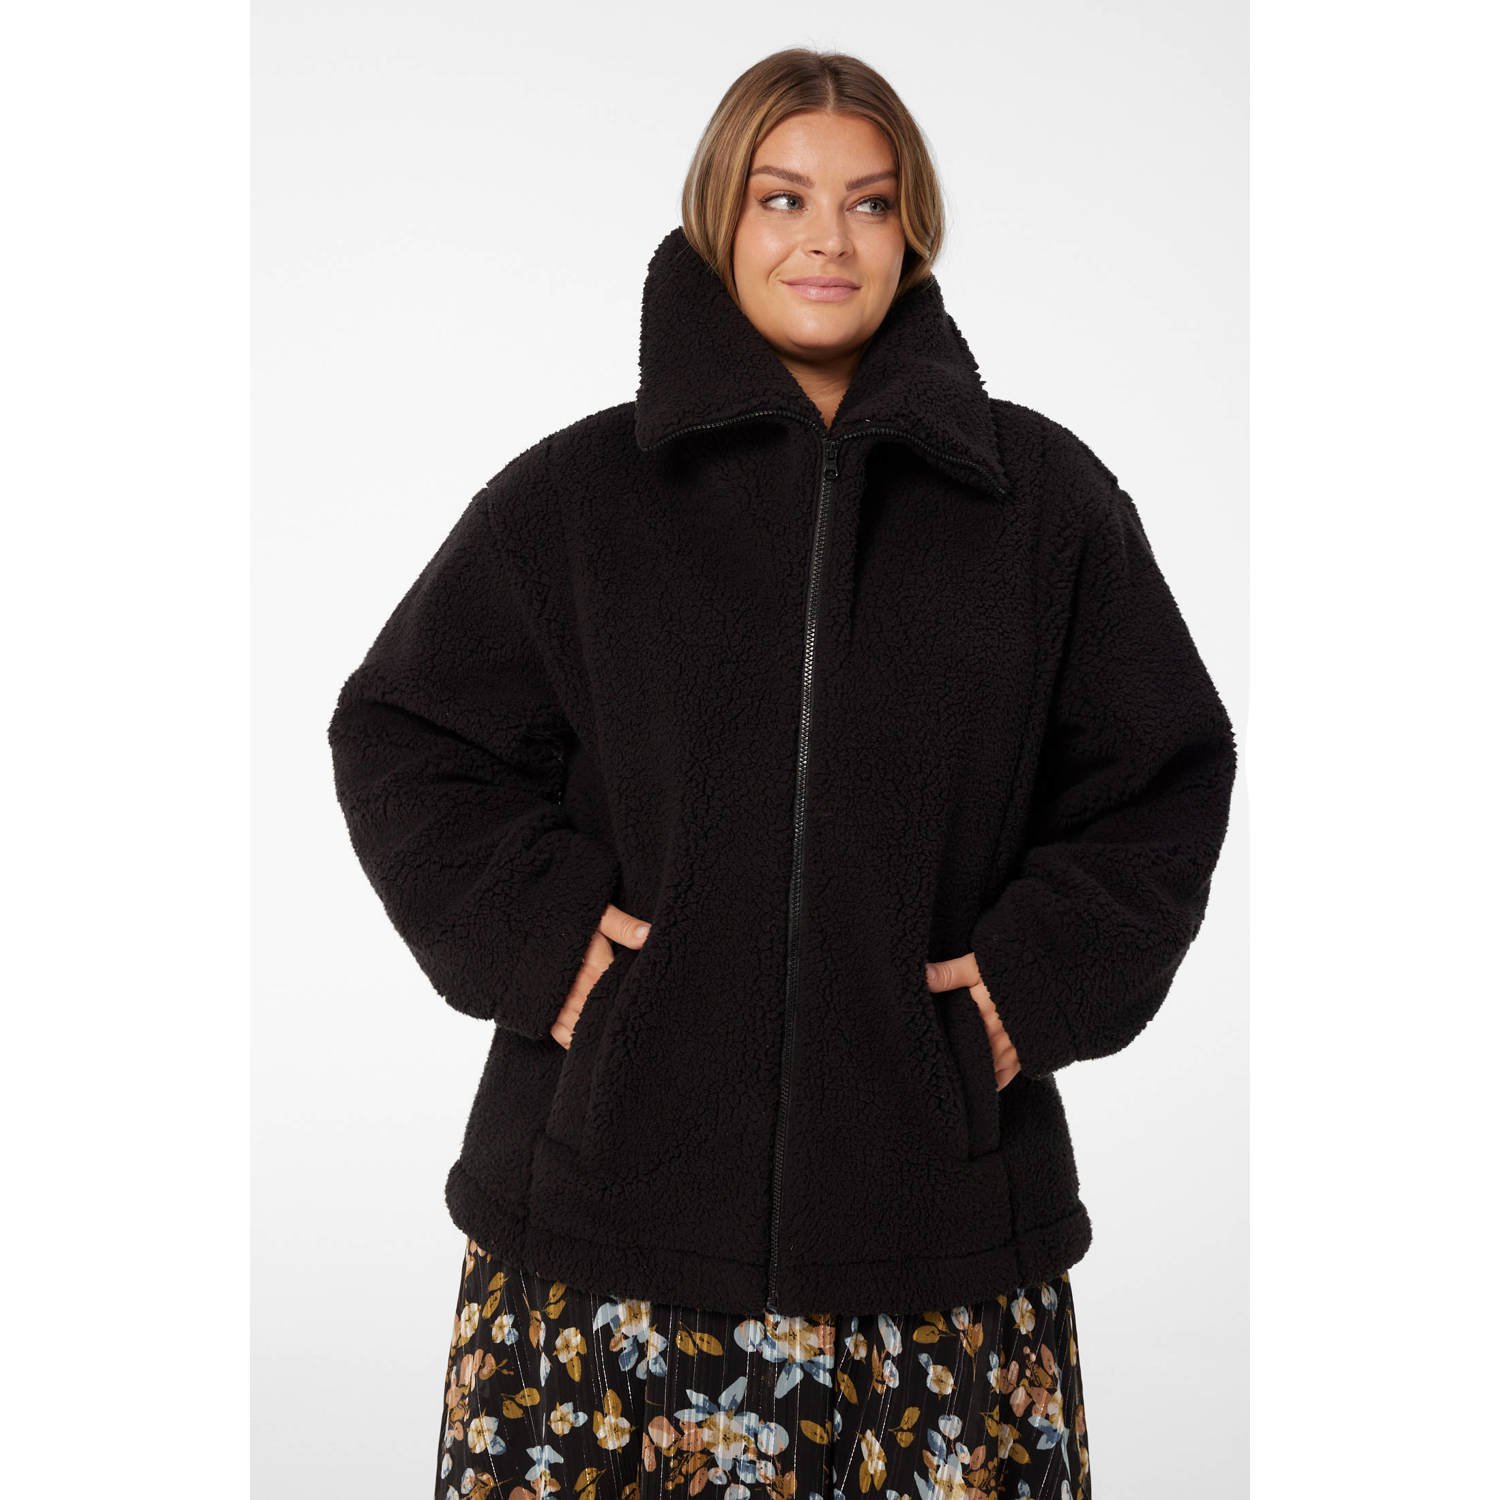 Miljuschka by Wehkamp oversized fleece jas zwart